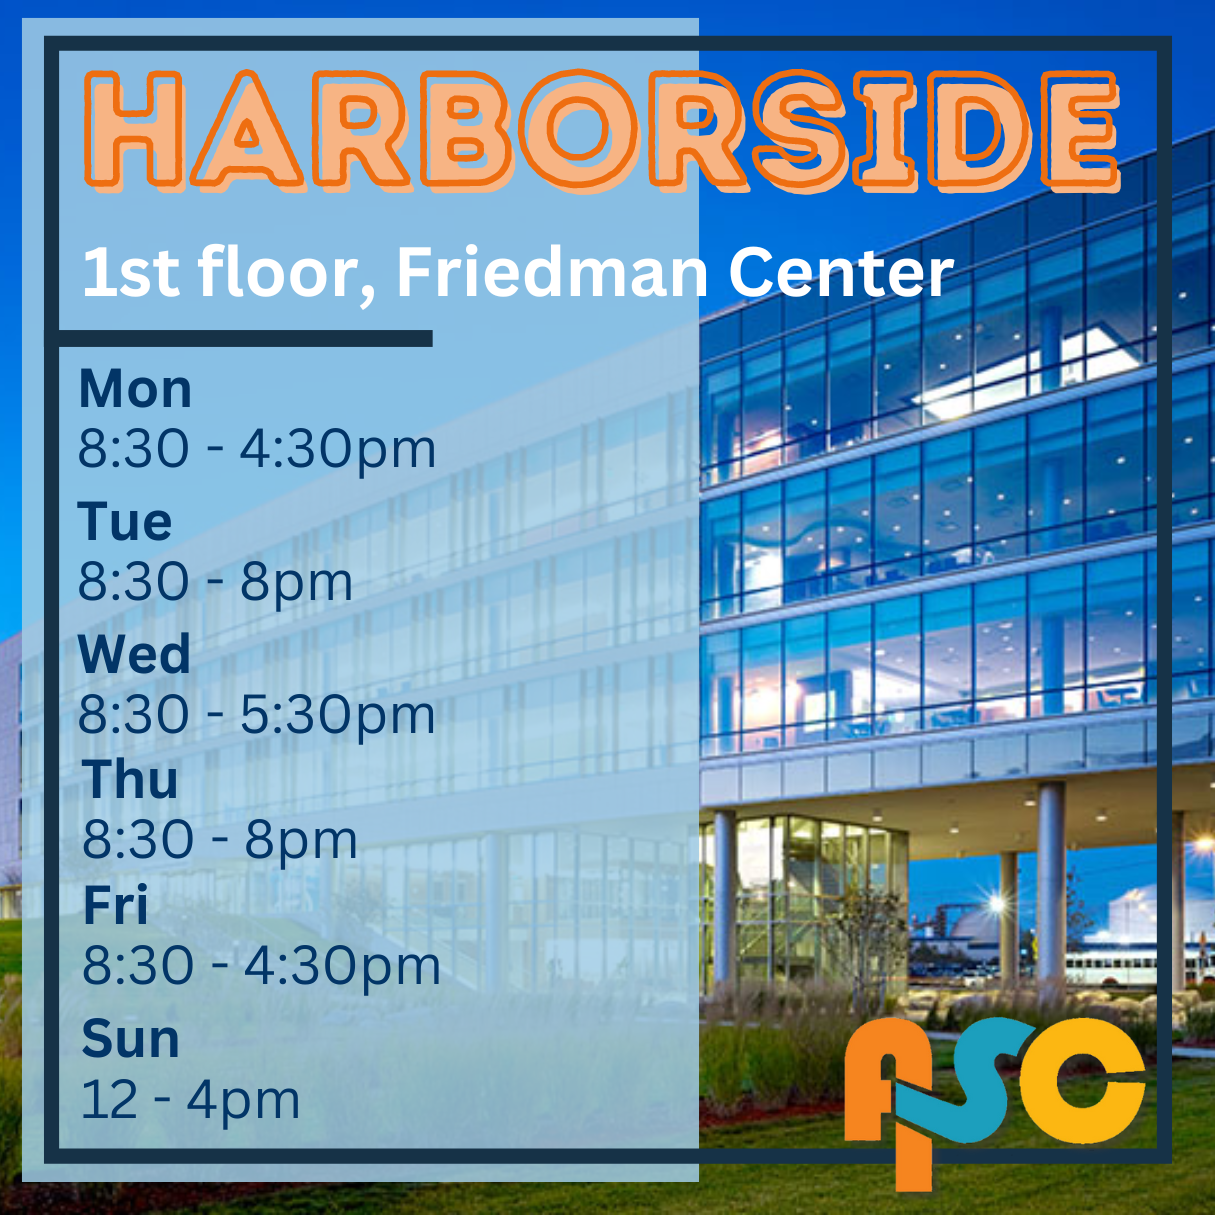 Harborside, 1st floor, Friedman Center, Mon 8:30-4:30pm, Tue 8:30-8pm, Wed 8:30-5:30pm, Thu 8:30-8pm, Fri 8:30-4:30pm, Sun 12-4pm